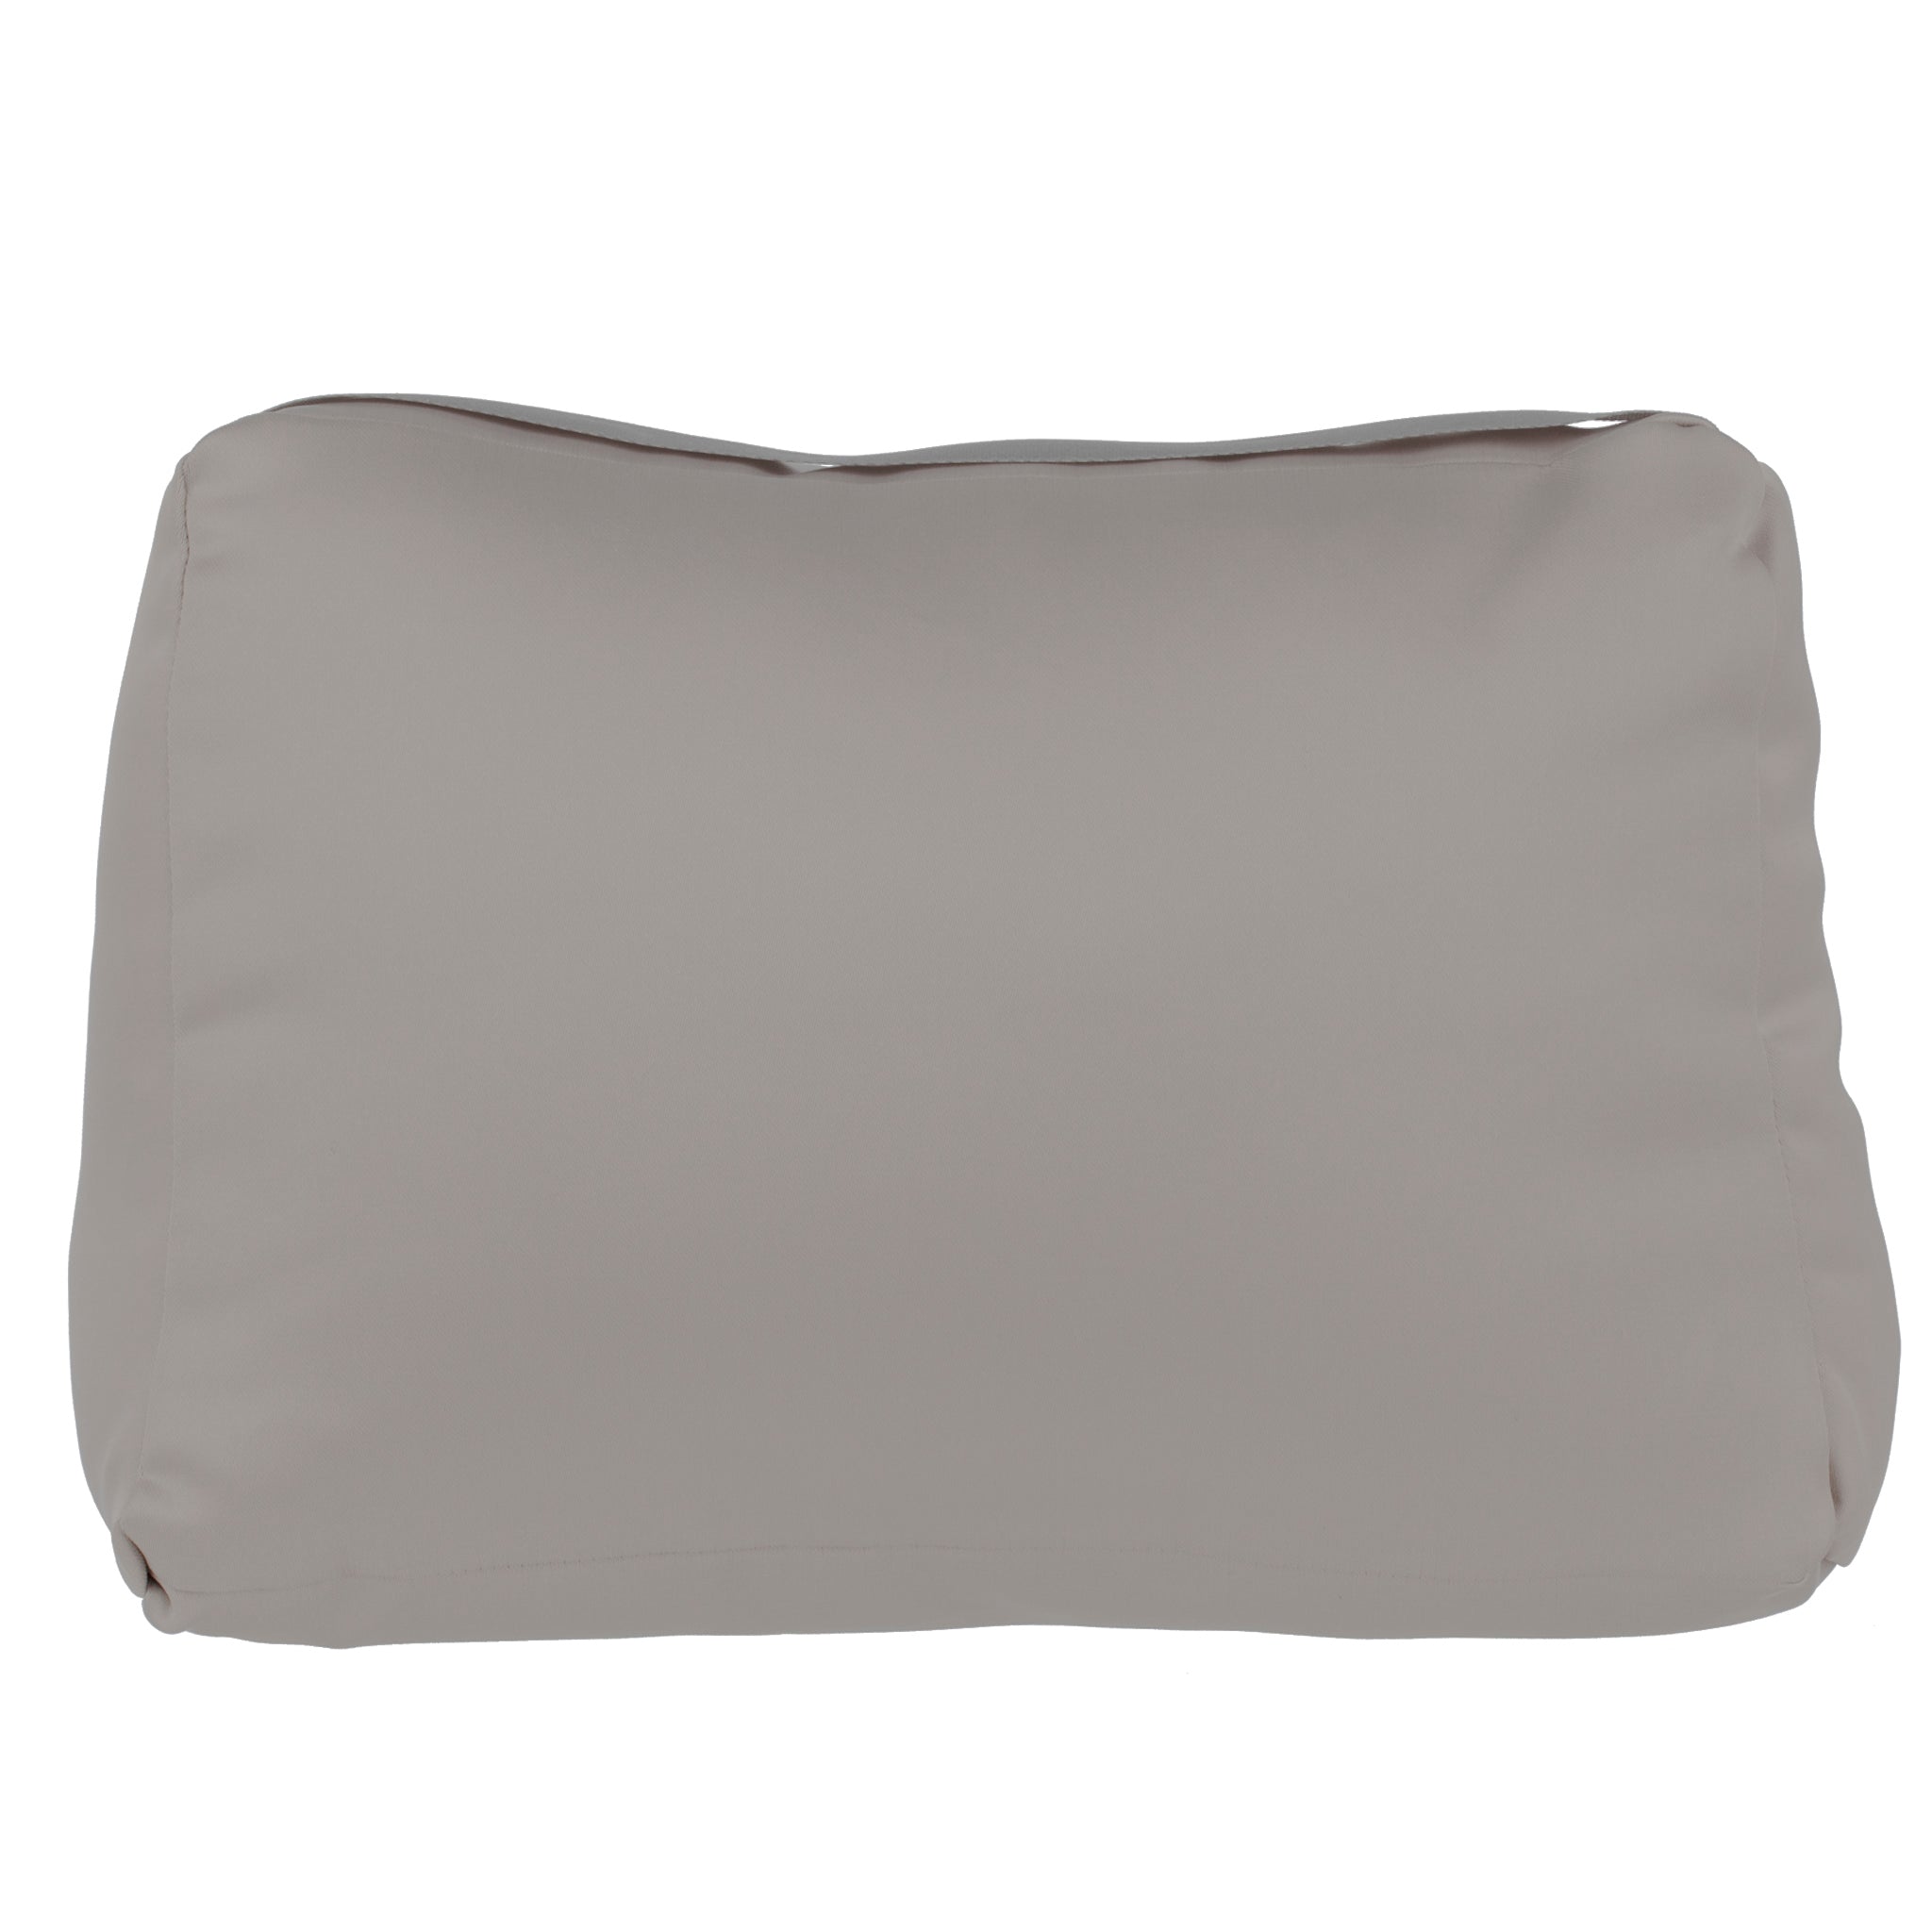 Birkin Bag Pillow Insert - Multiple Sizes